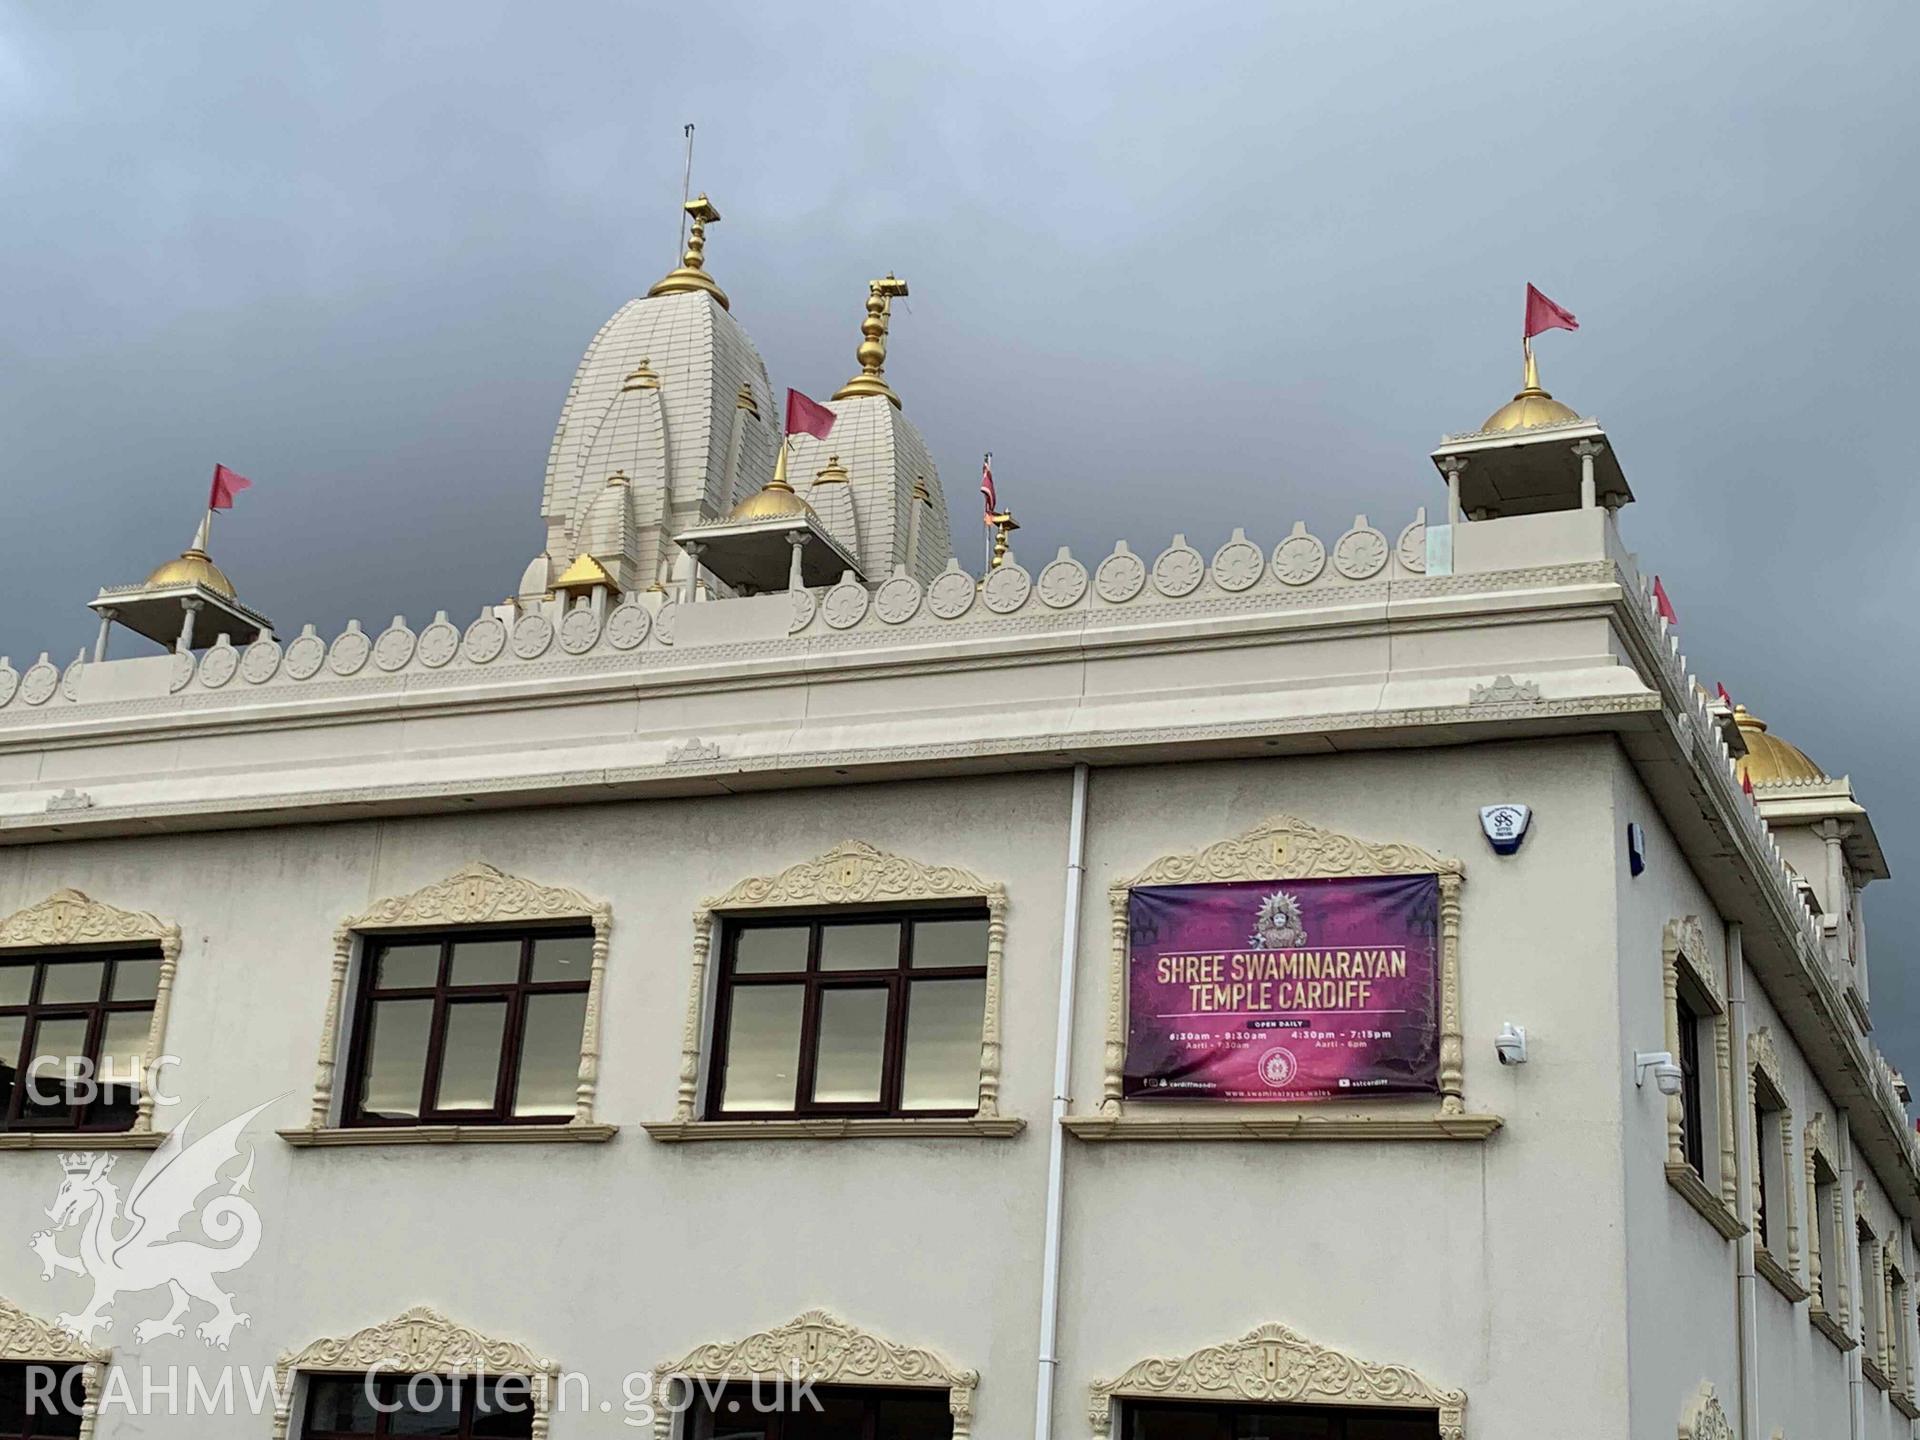 Photograph showing exterior of Shri Swaminaryan temple, Cardiff, taken in November 2021.